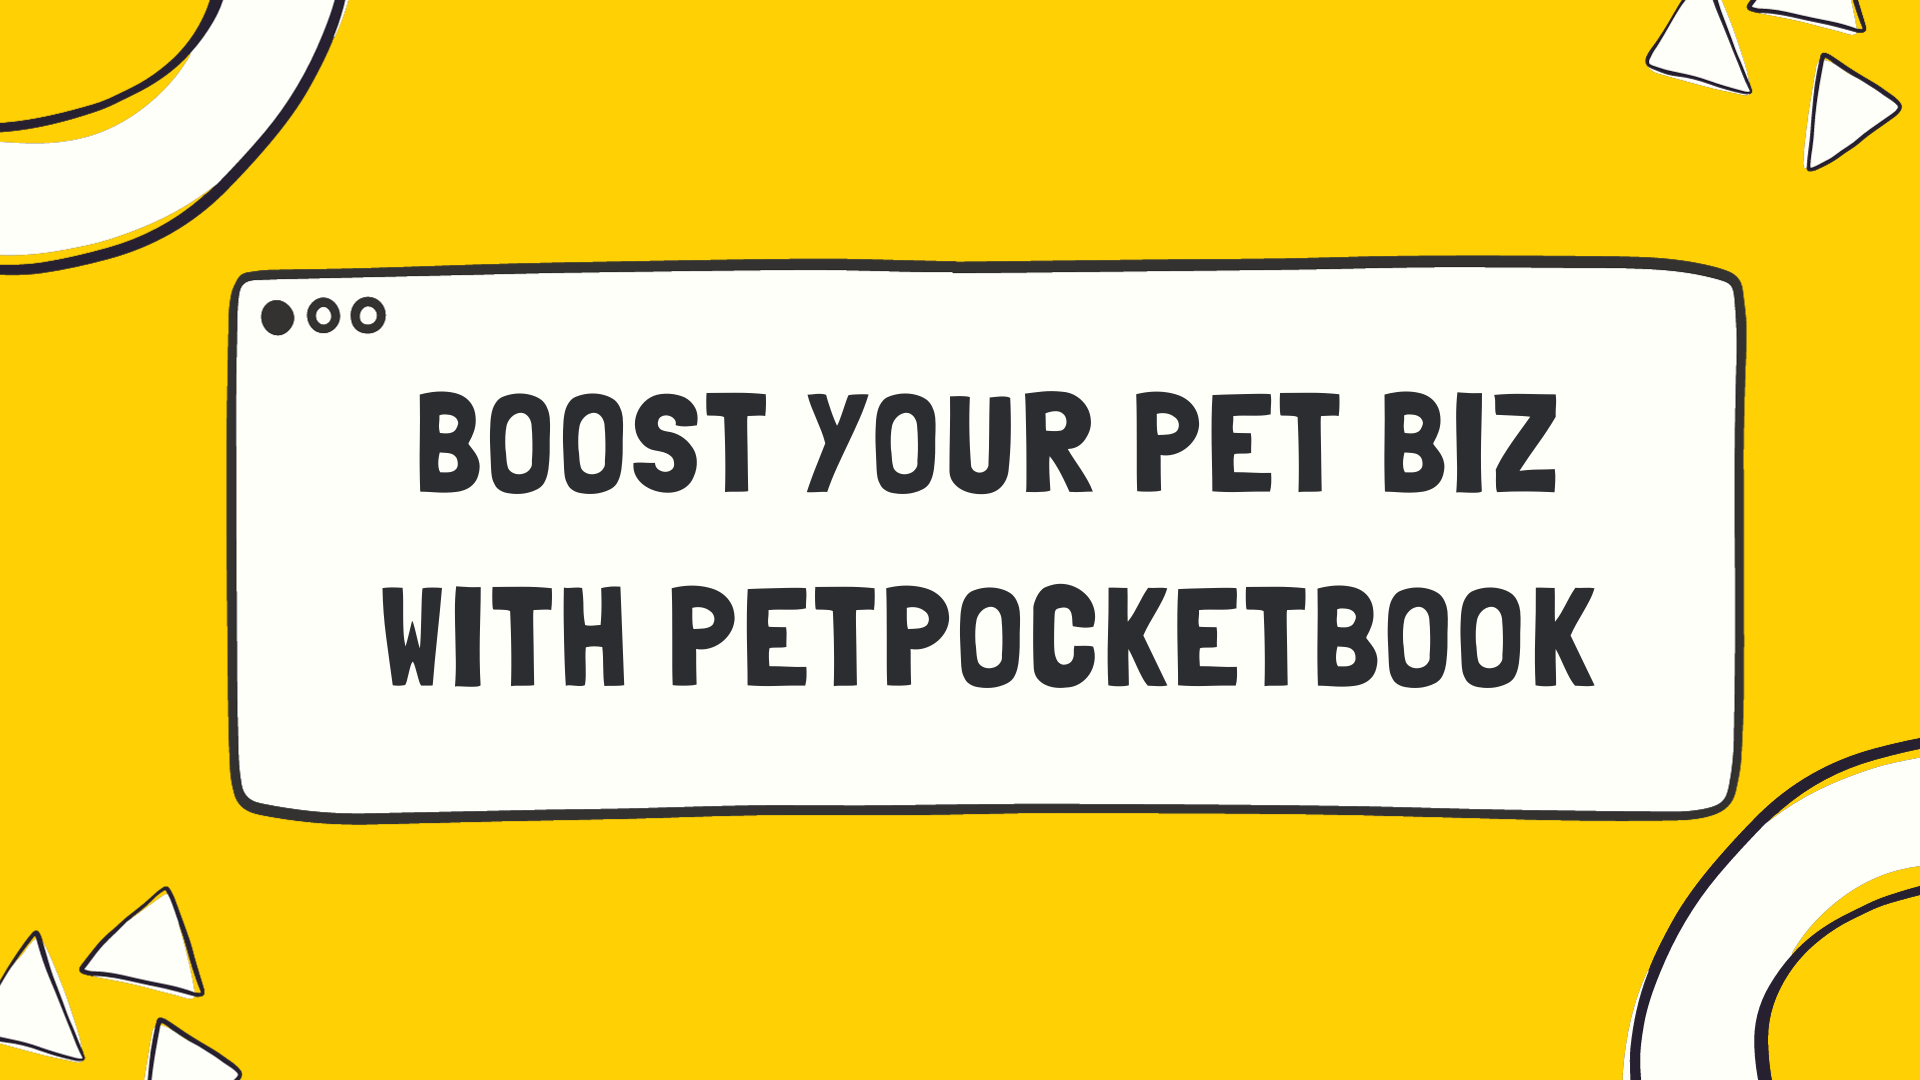 Boost Your Pet Biz with PetPocketbook